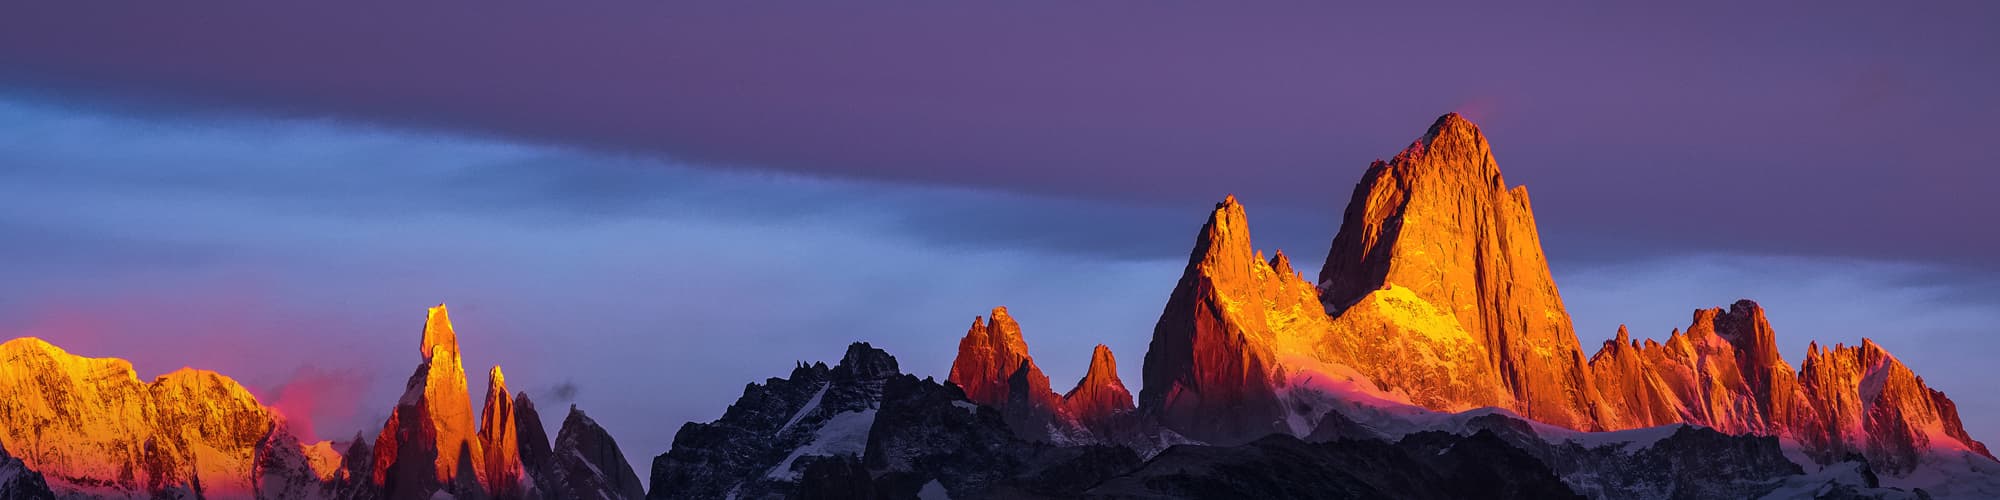 Voyage en groupe Patagonie argentine © George Theodore/Danita Delimont / Adobe Stock